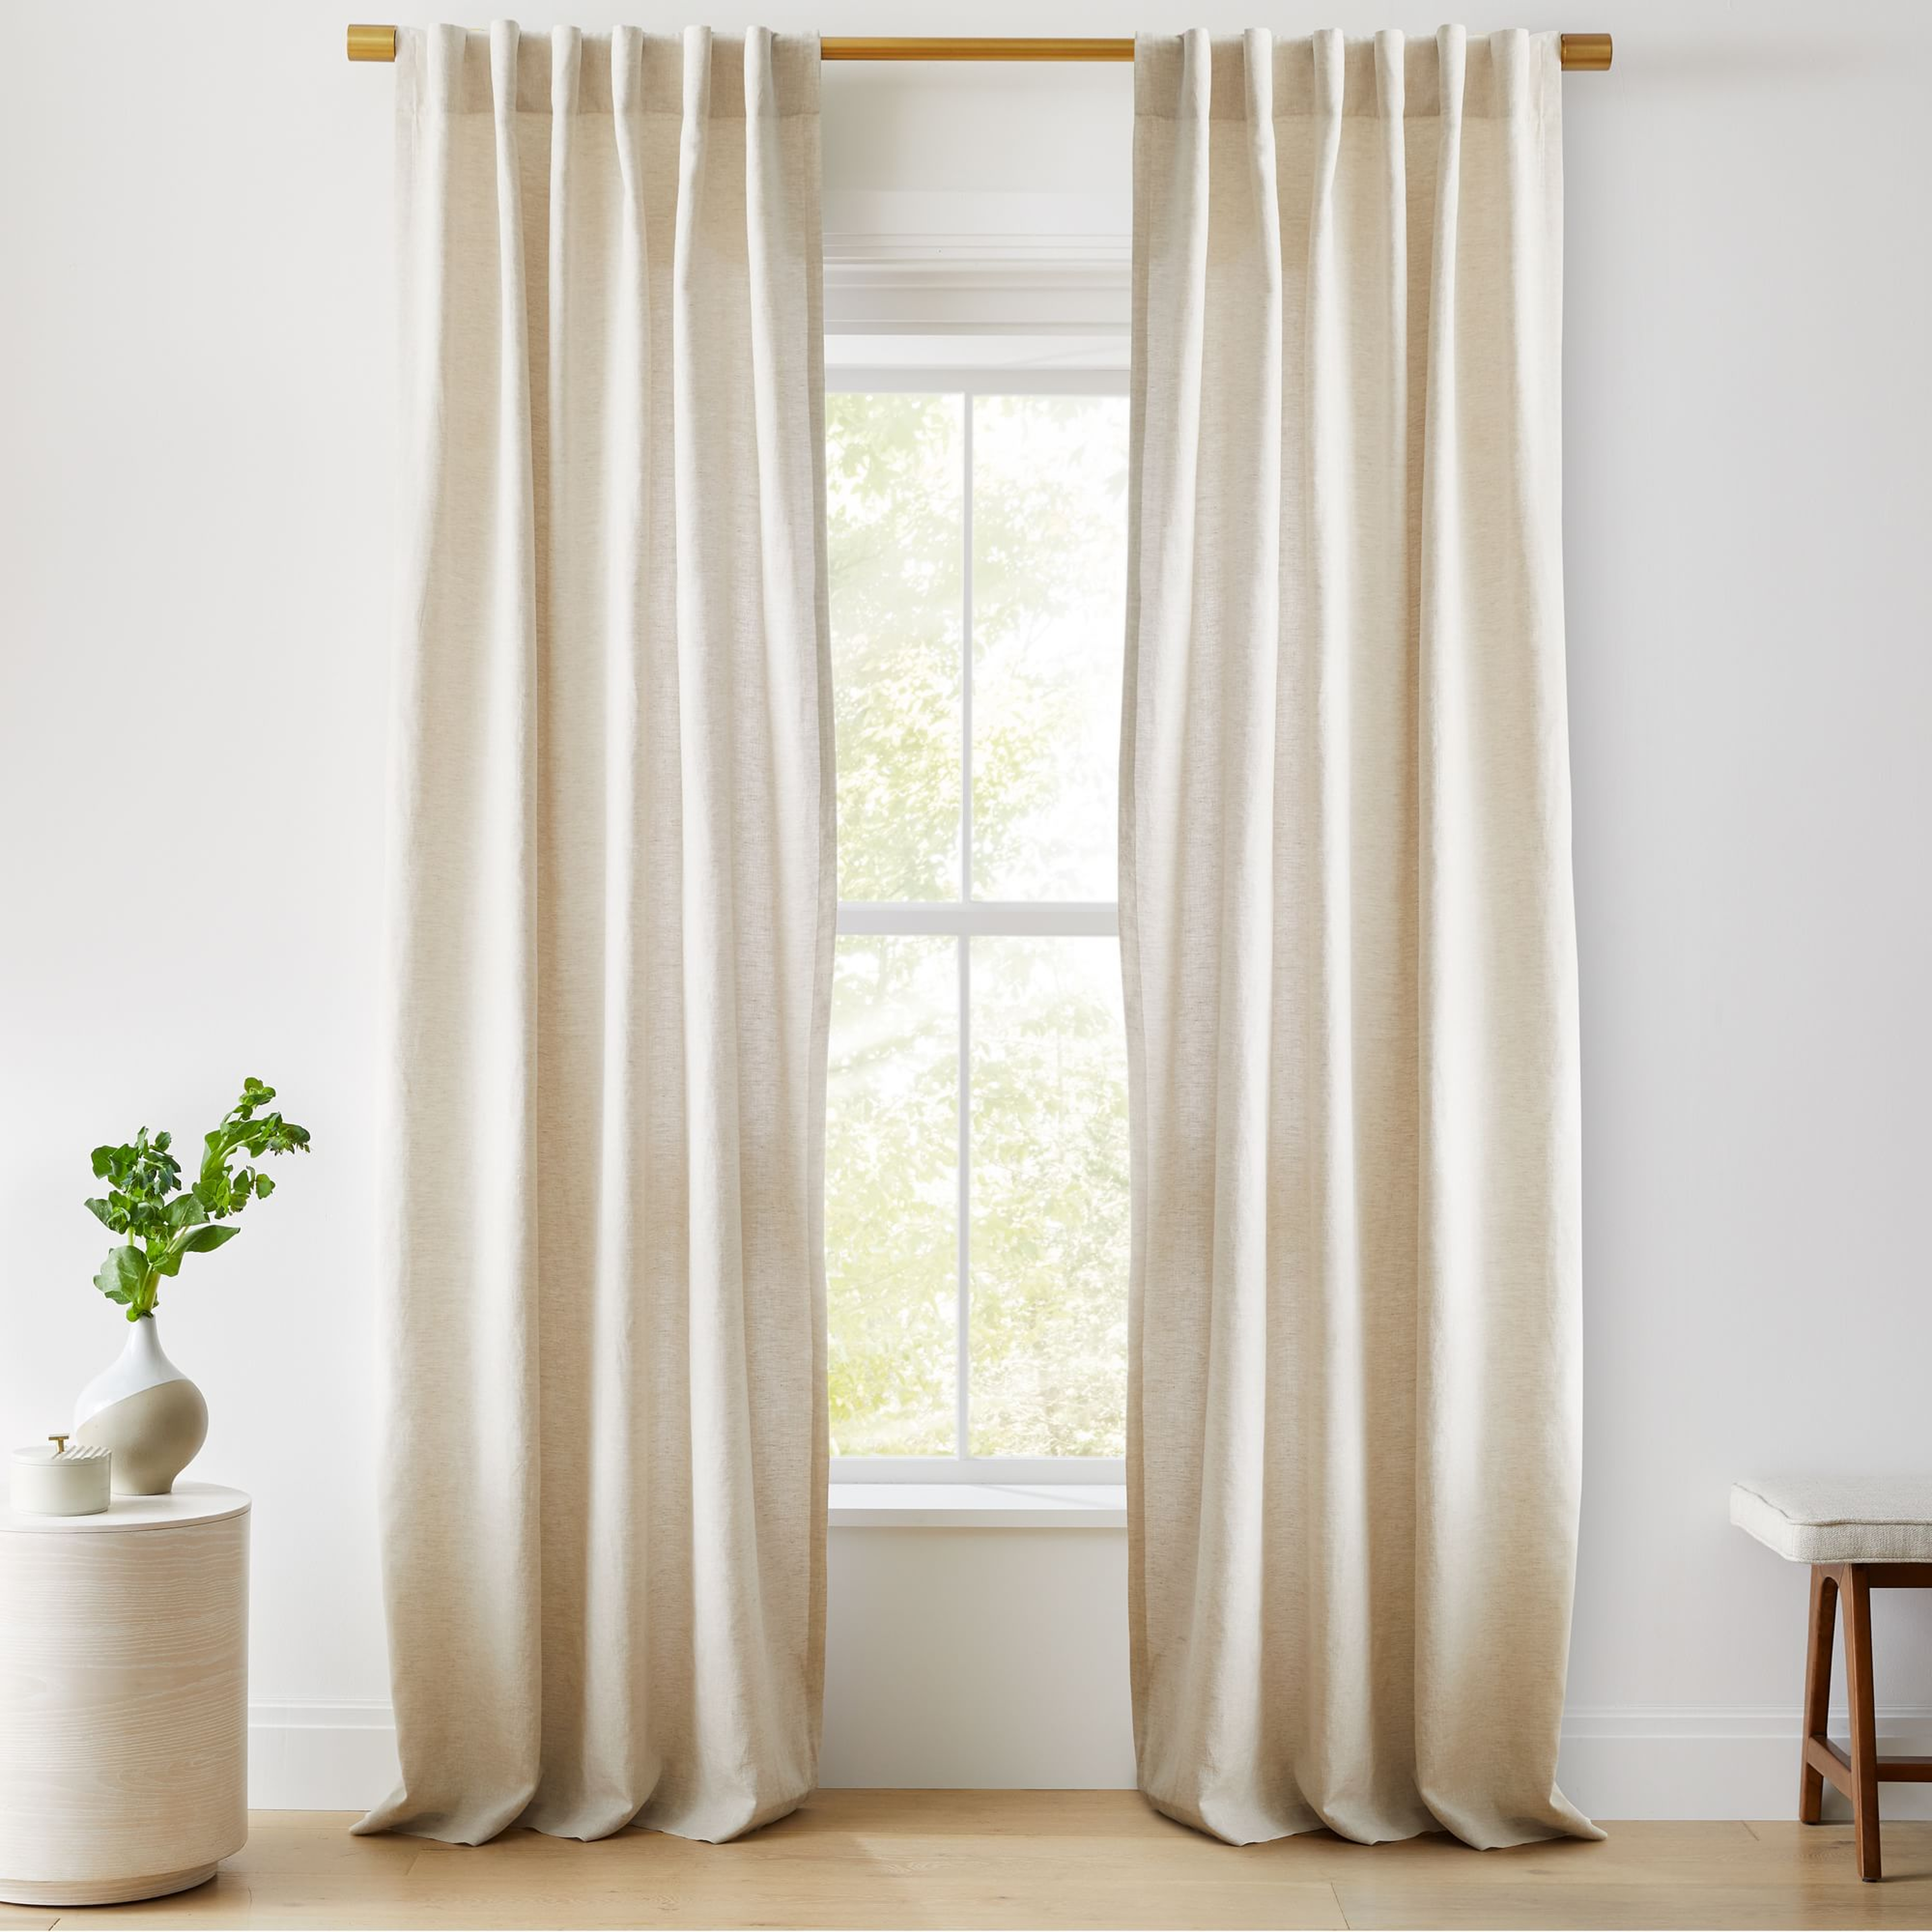 European Flax Linen Curtain - Natural, Cotton Lining, 48"x96", Set of 2 - West Elm